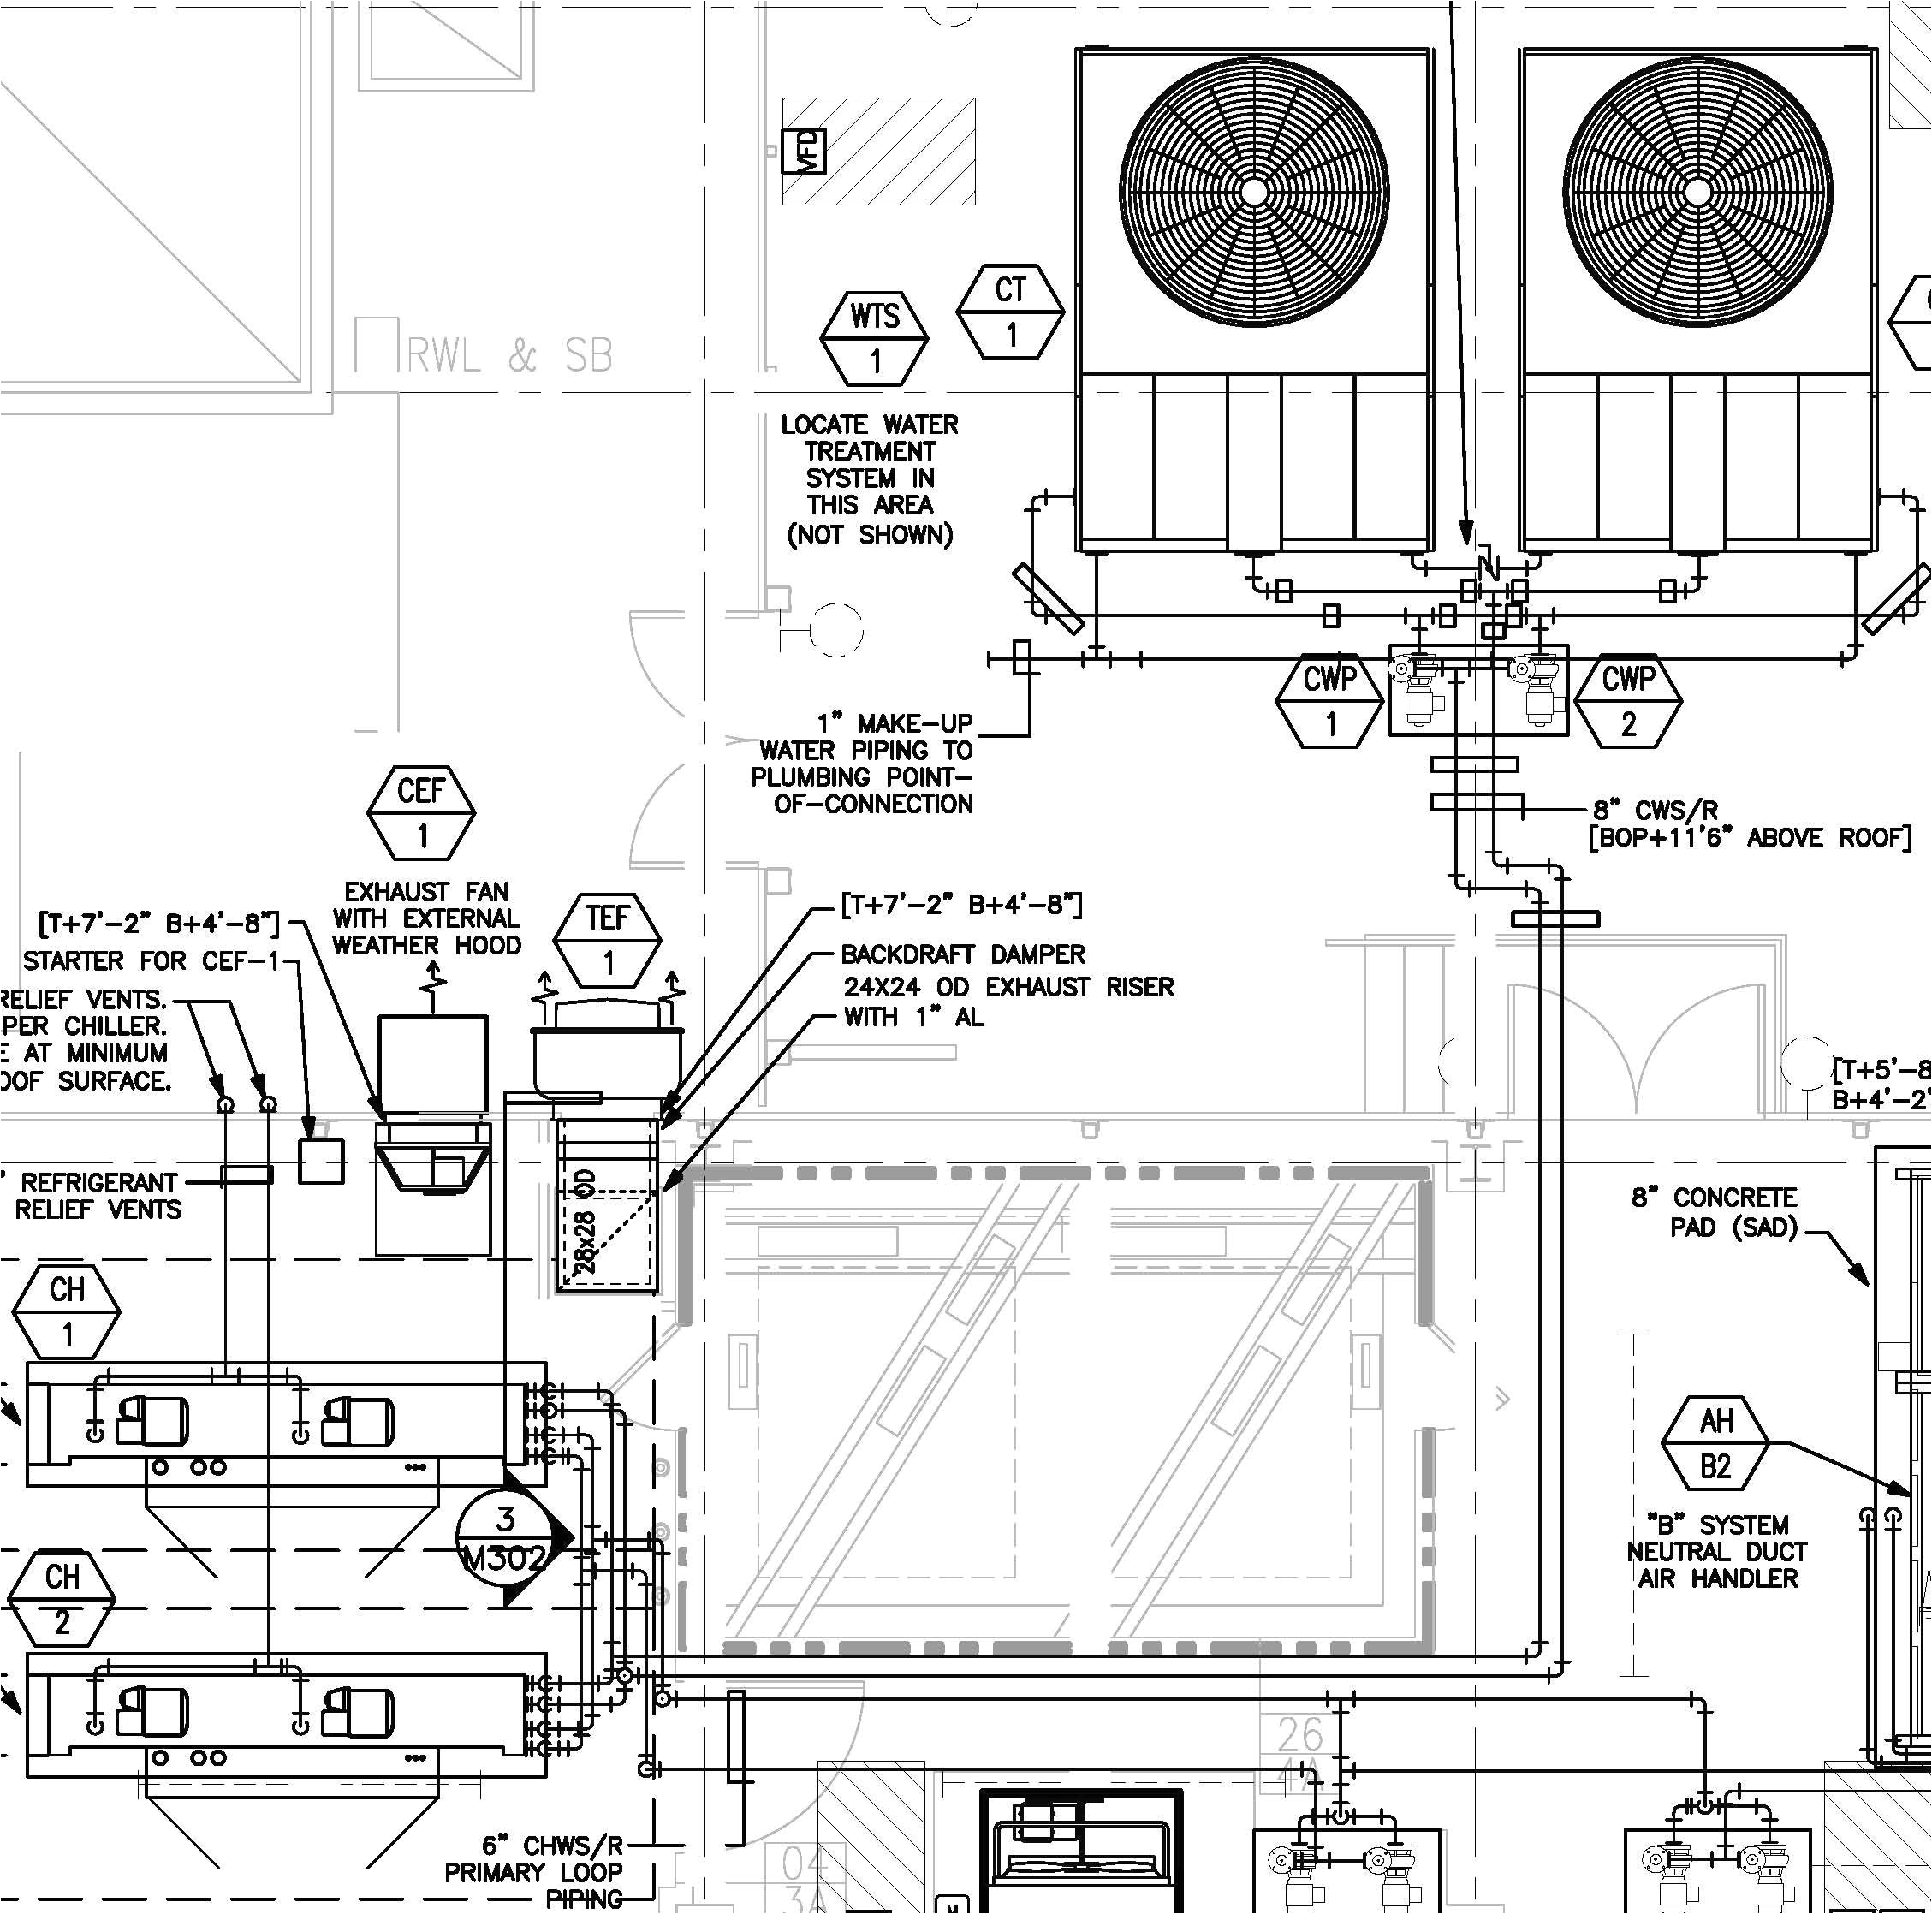 ucs wiring diagram wiring diagramucs wiring diagram wiring diagram databasercs mar actuator wiring diagram